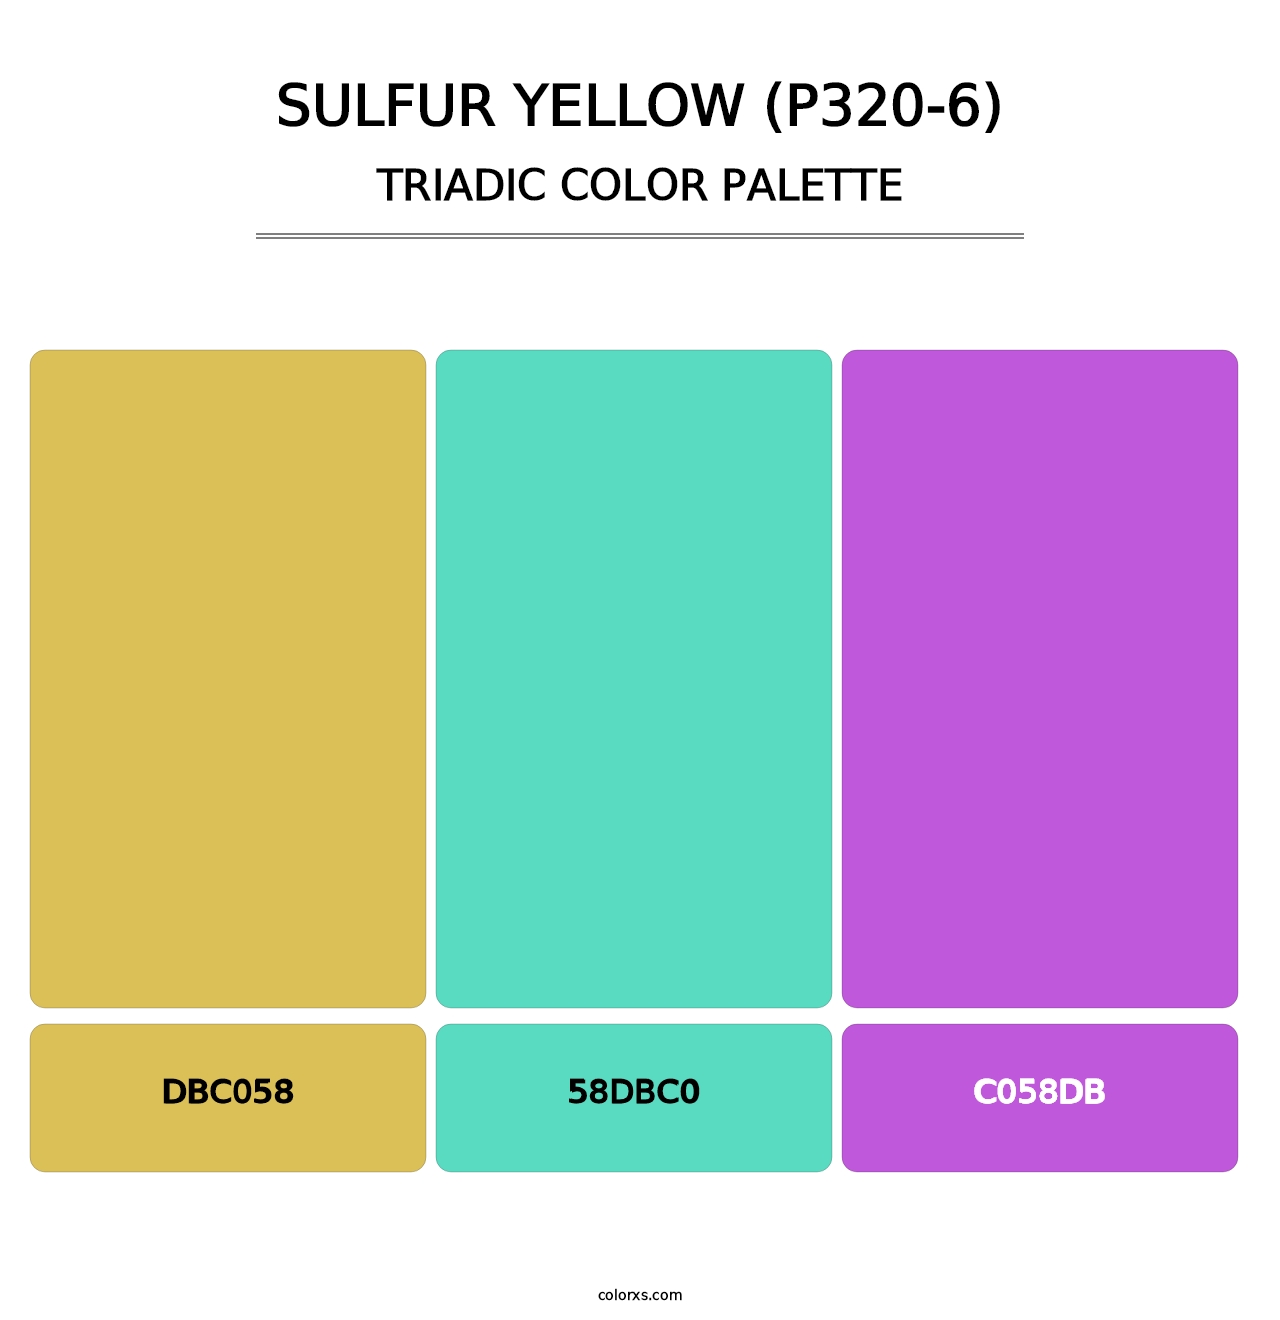 Sulfur Yellow (P320-6) - Triadic Color Palette